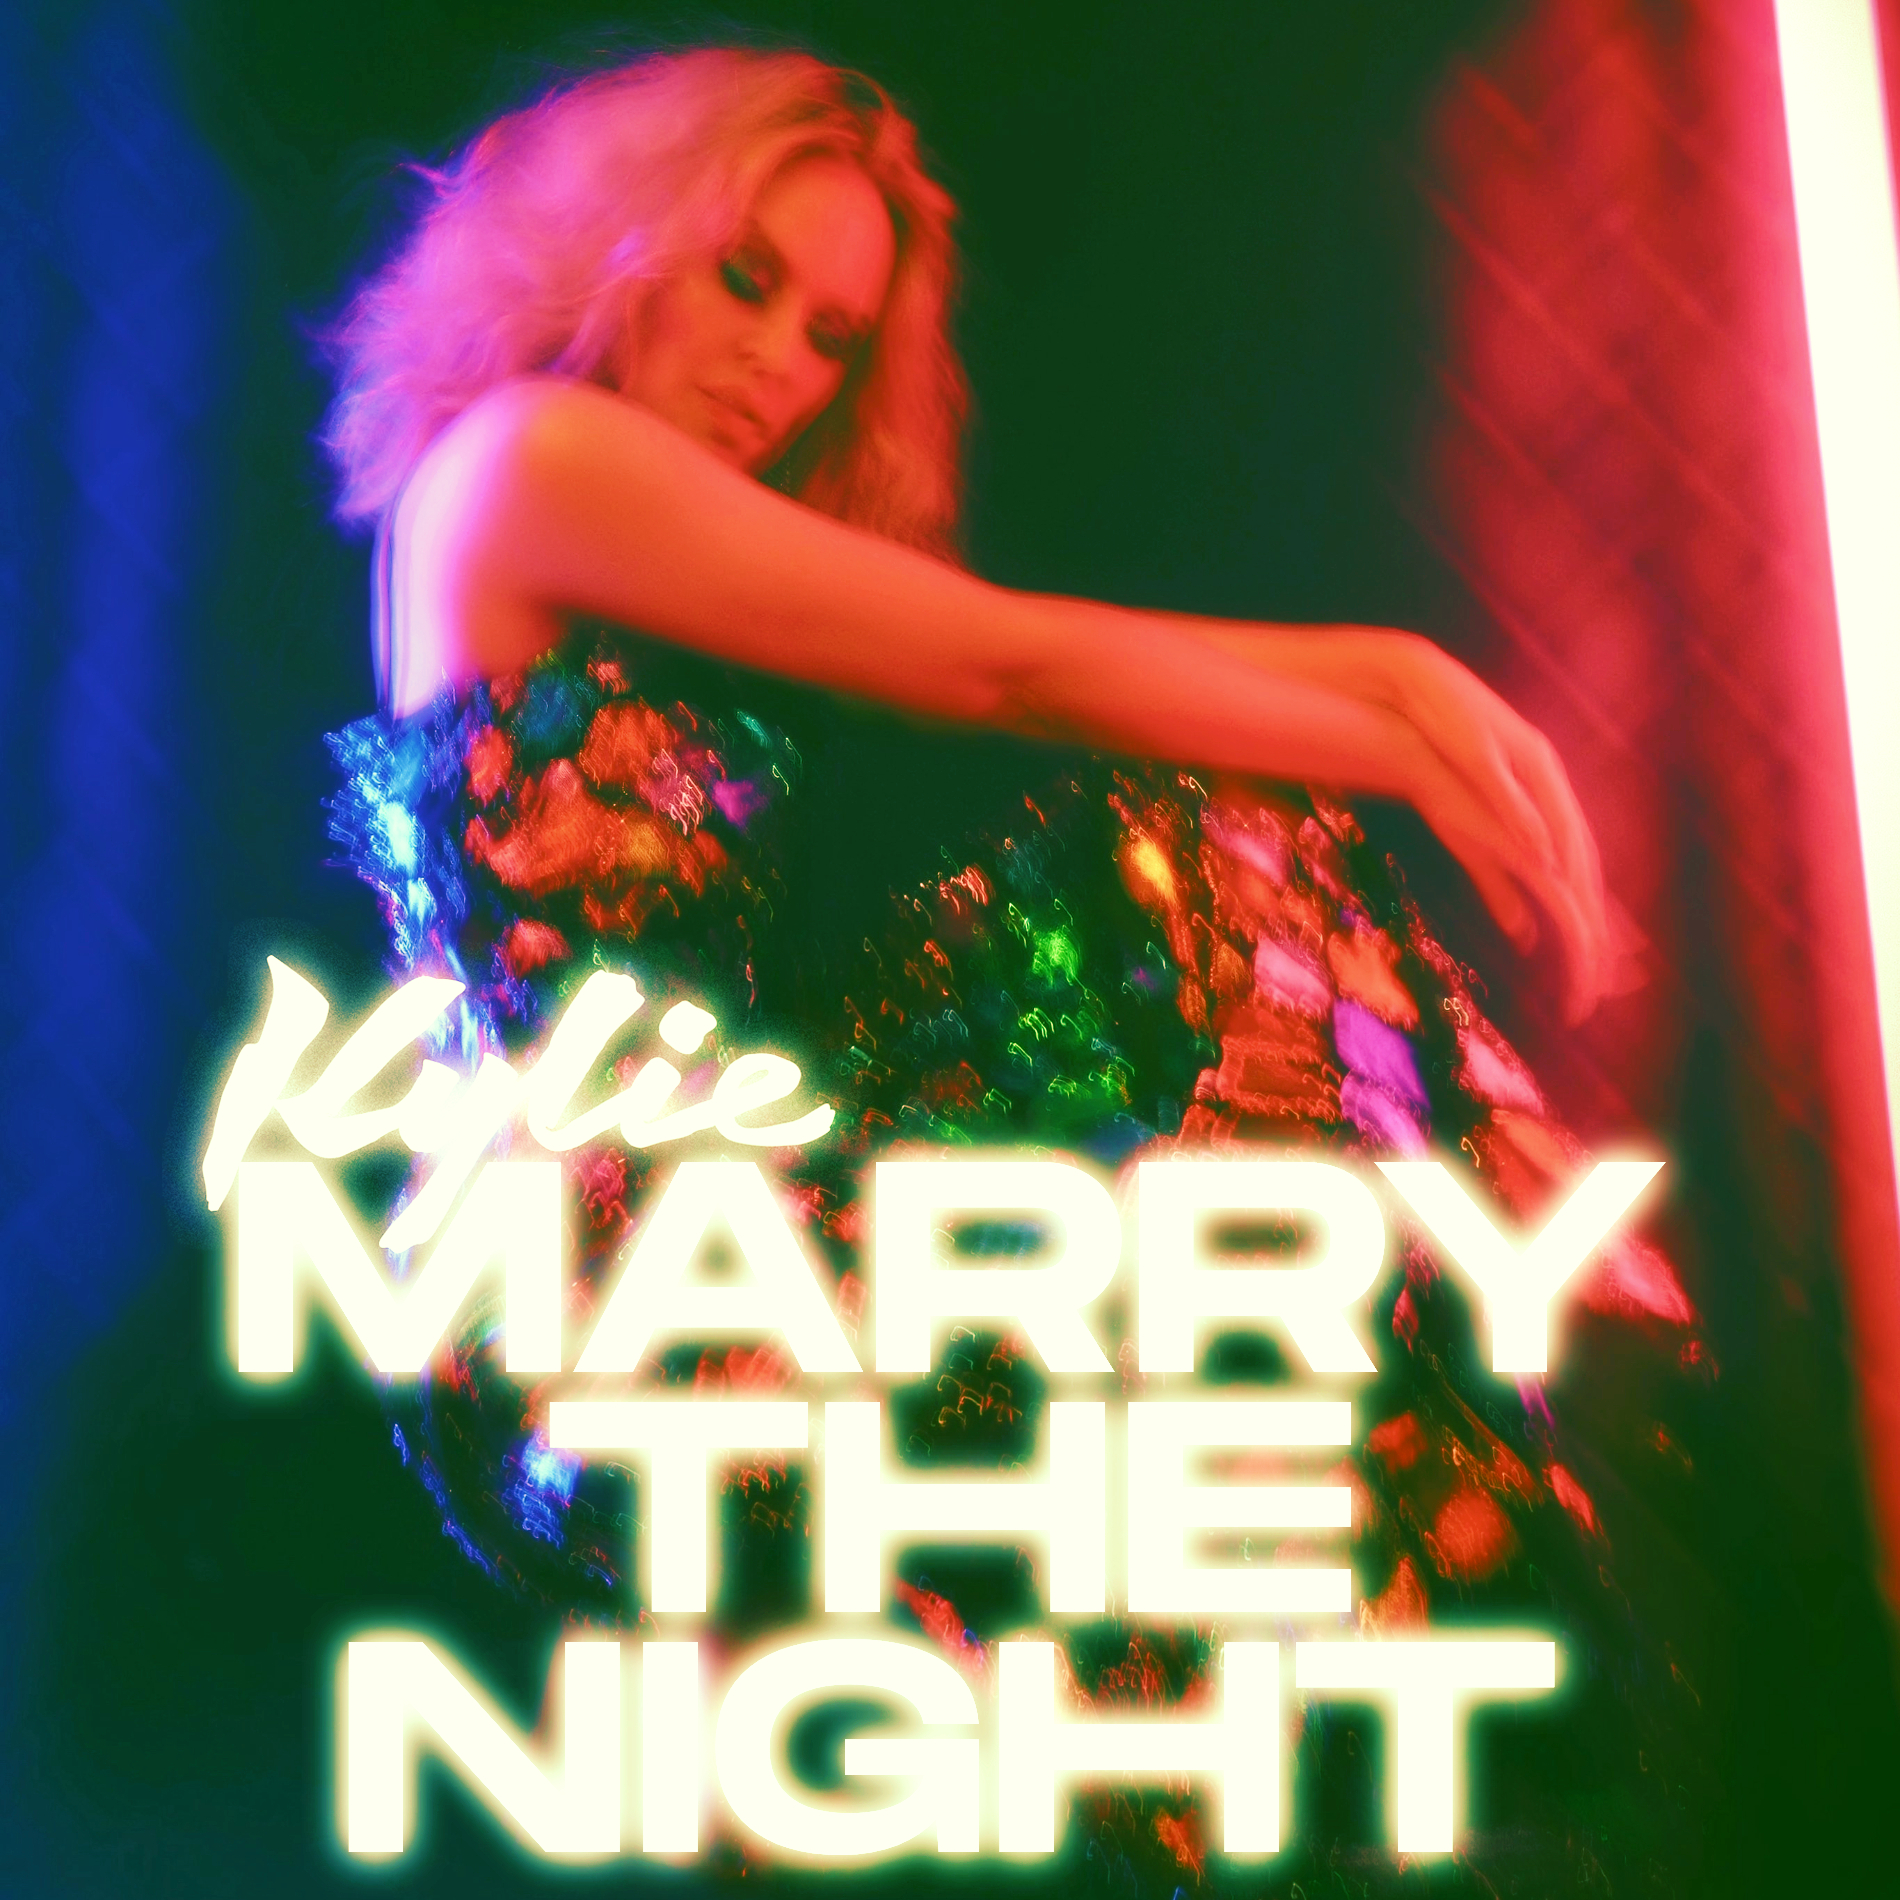 Marry the Night леди Гага. Sia ft. Kylie Minogue Dance Alone. Песня ночная леди